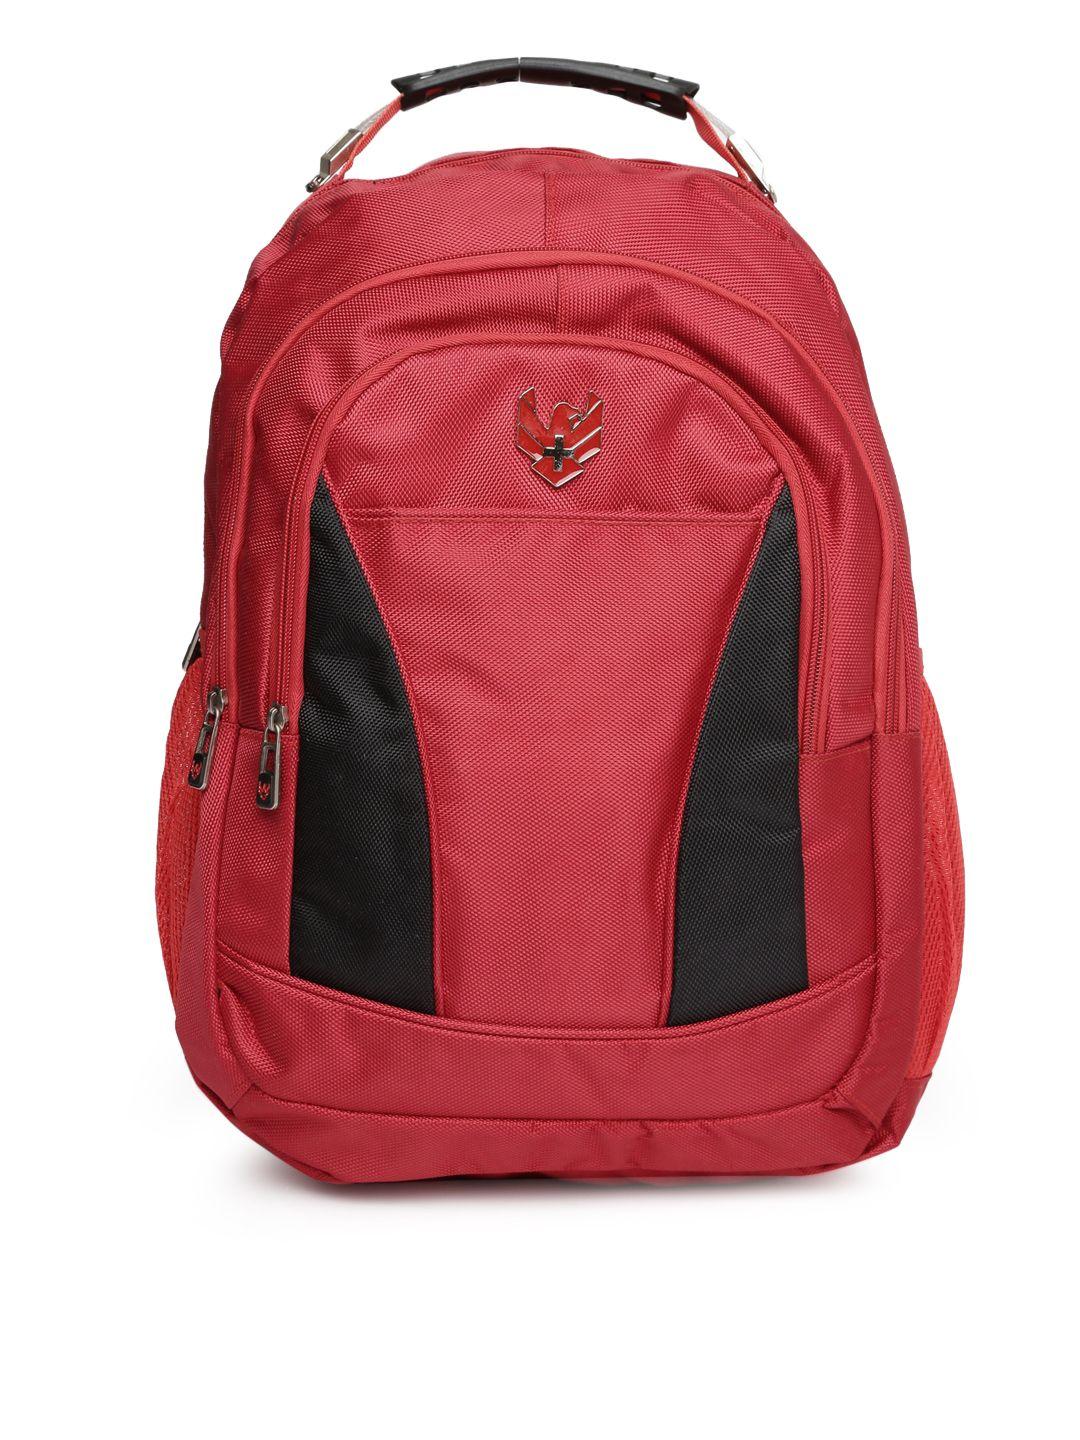 swiss eagle unisex red & black colourblocked laptop backpack